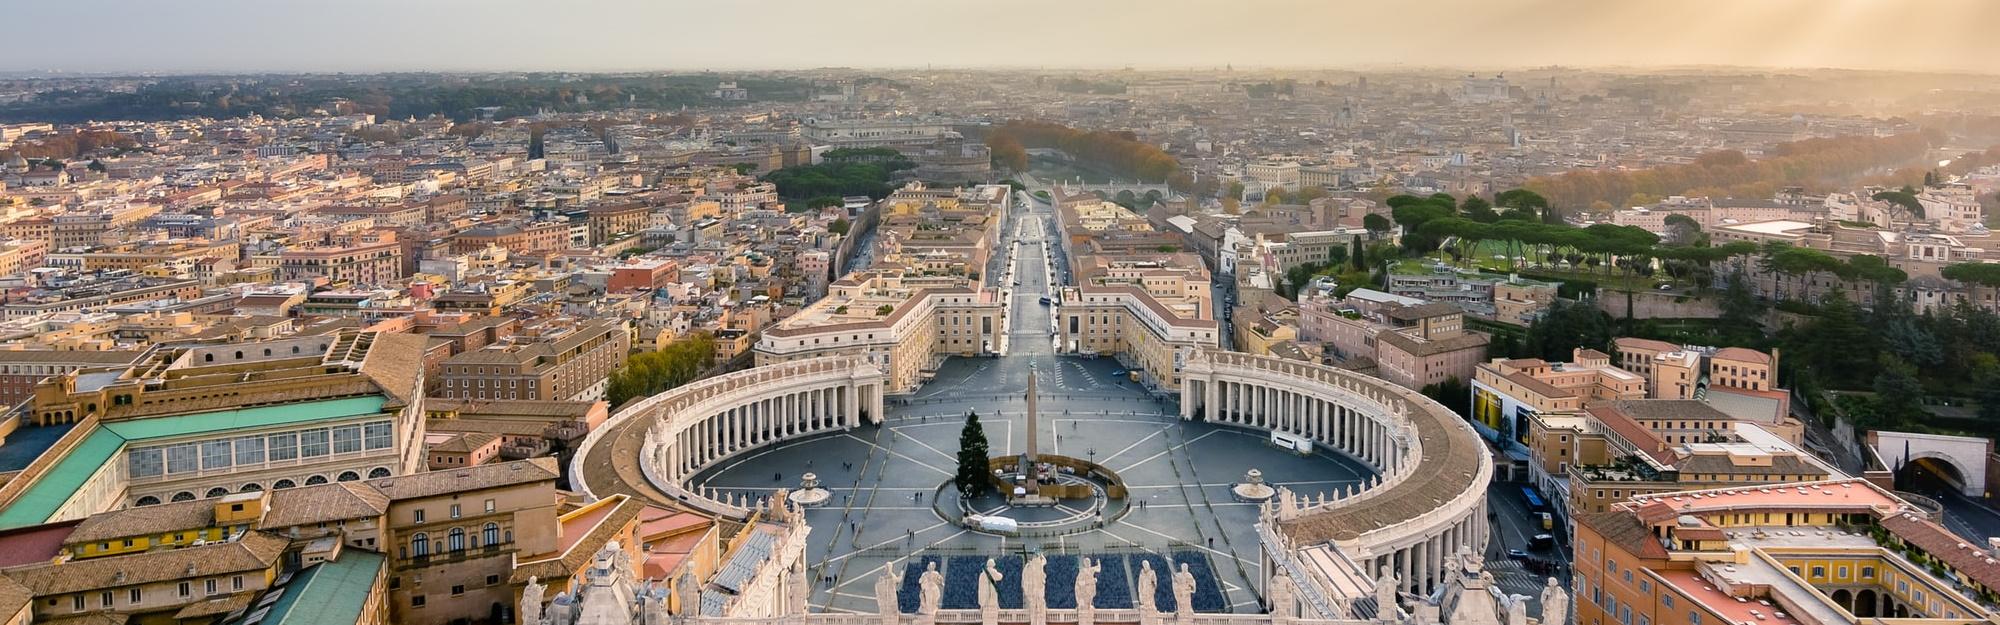 vatican city travel restrictions